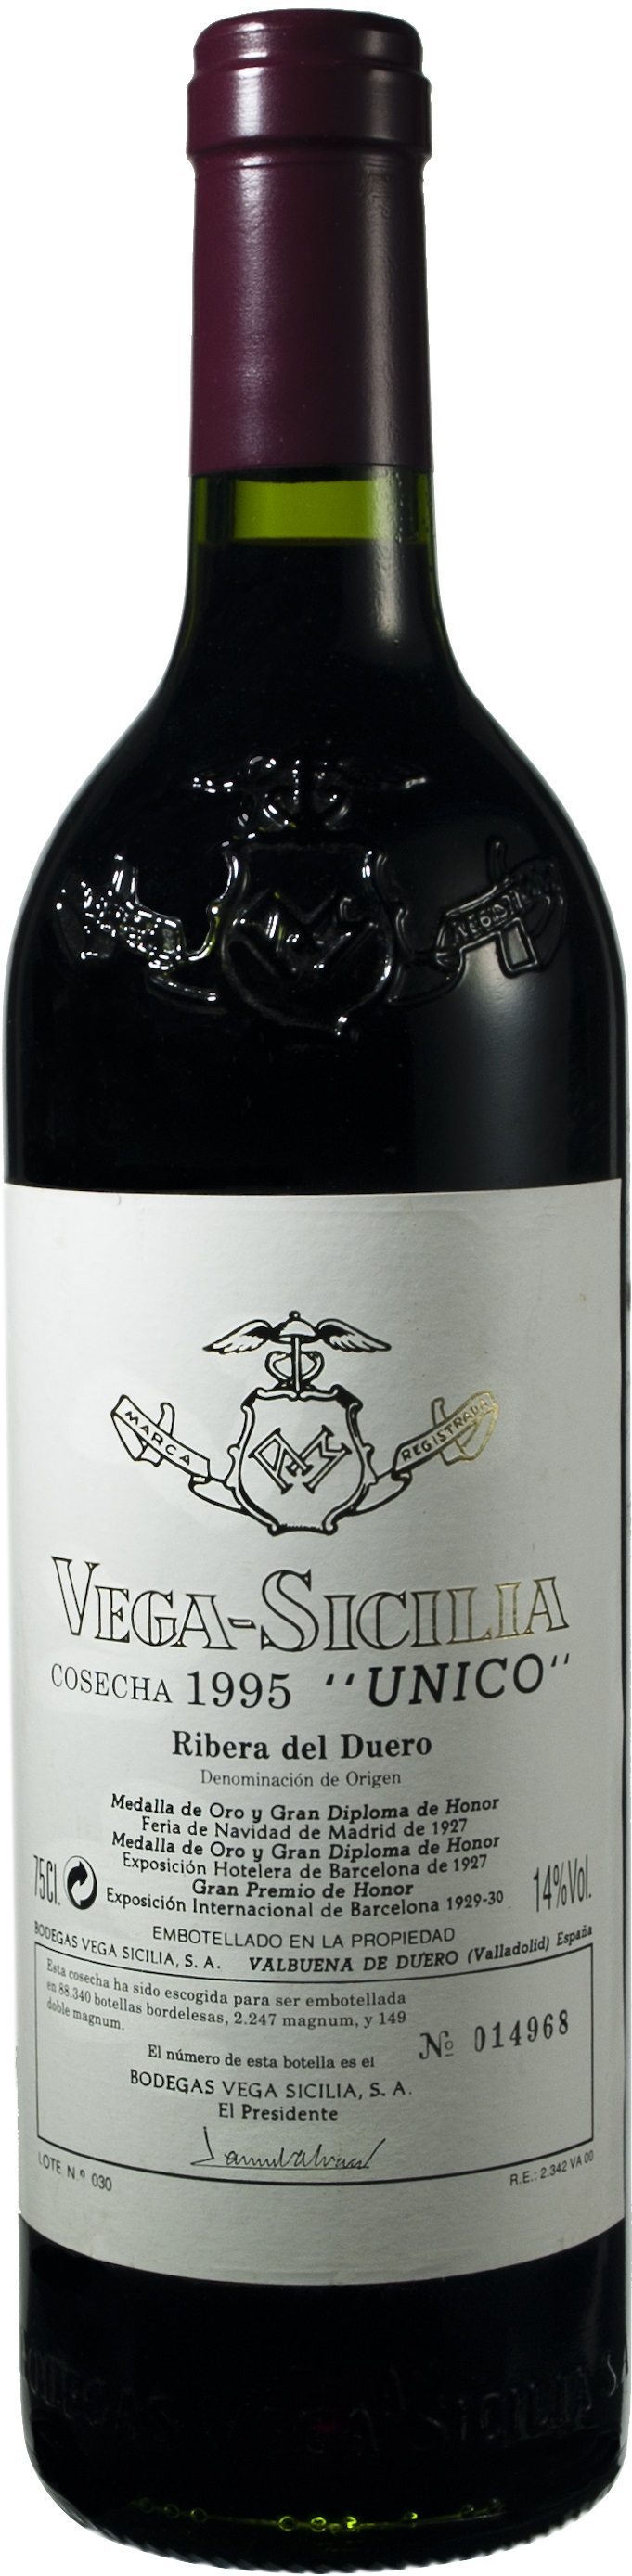 Image of Wine bottle Vega Sicilia Reserva